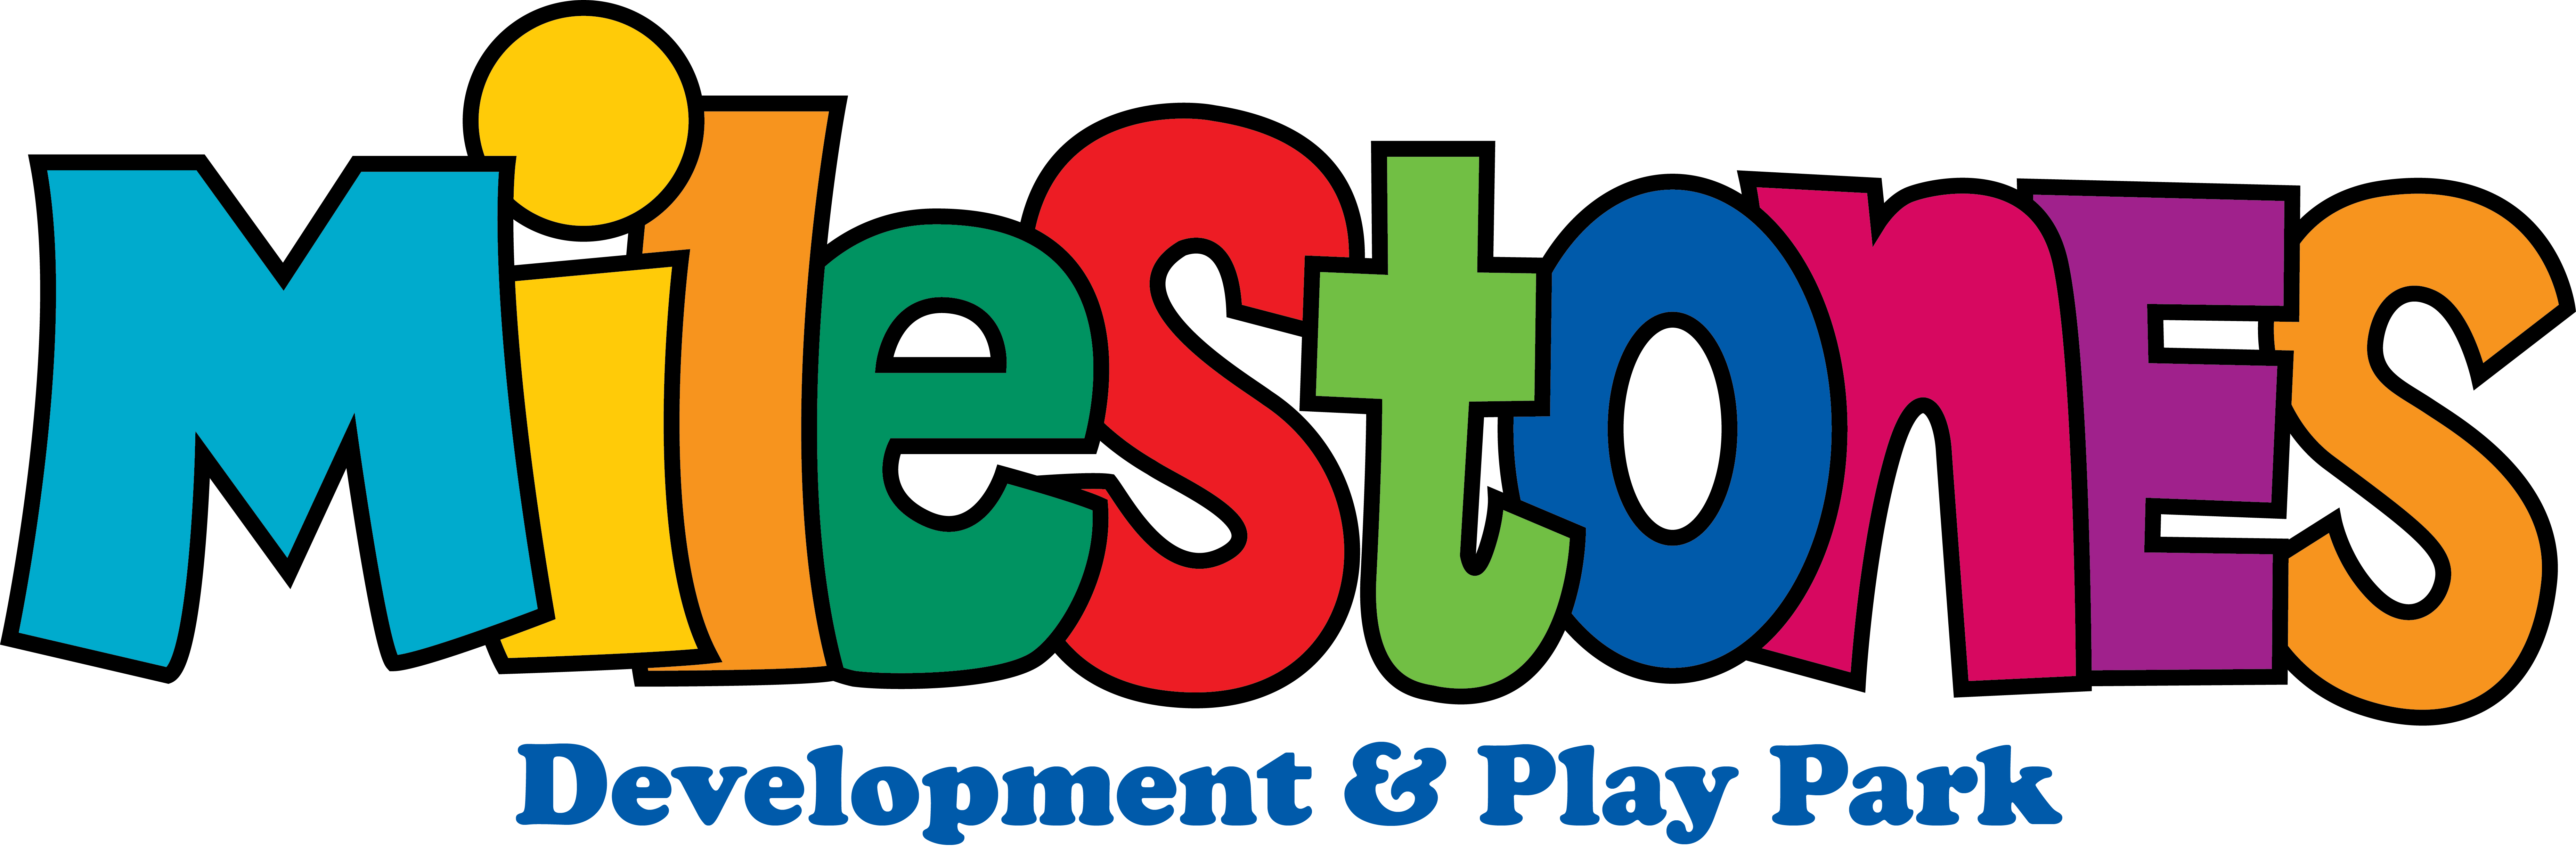 Milestones Development & Play Park logo with black outline